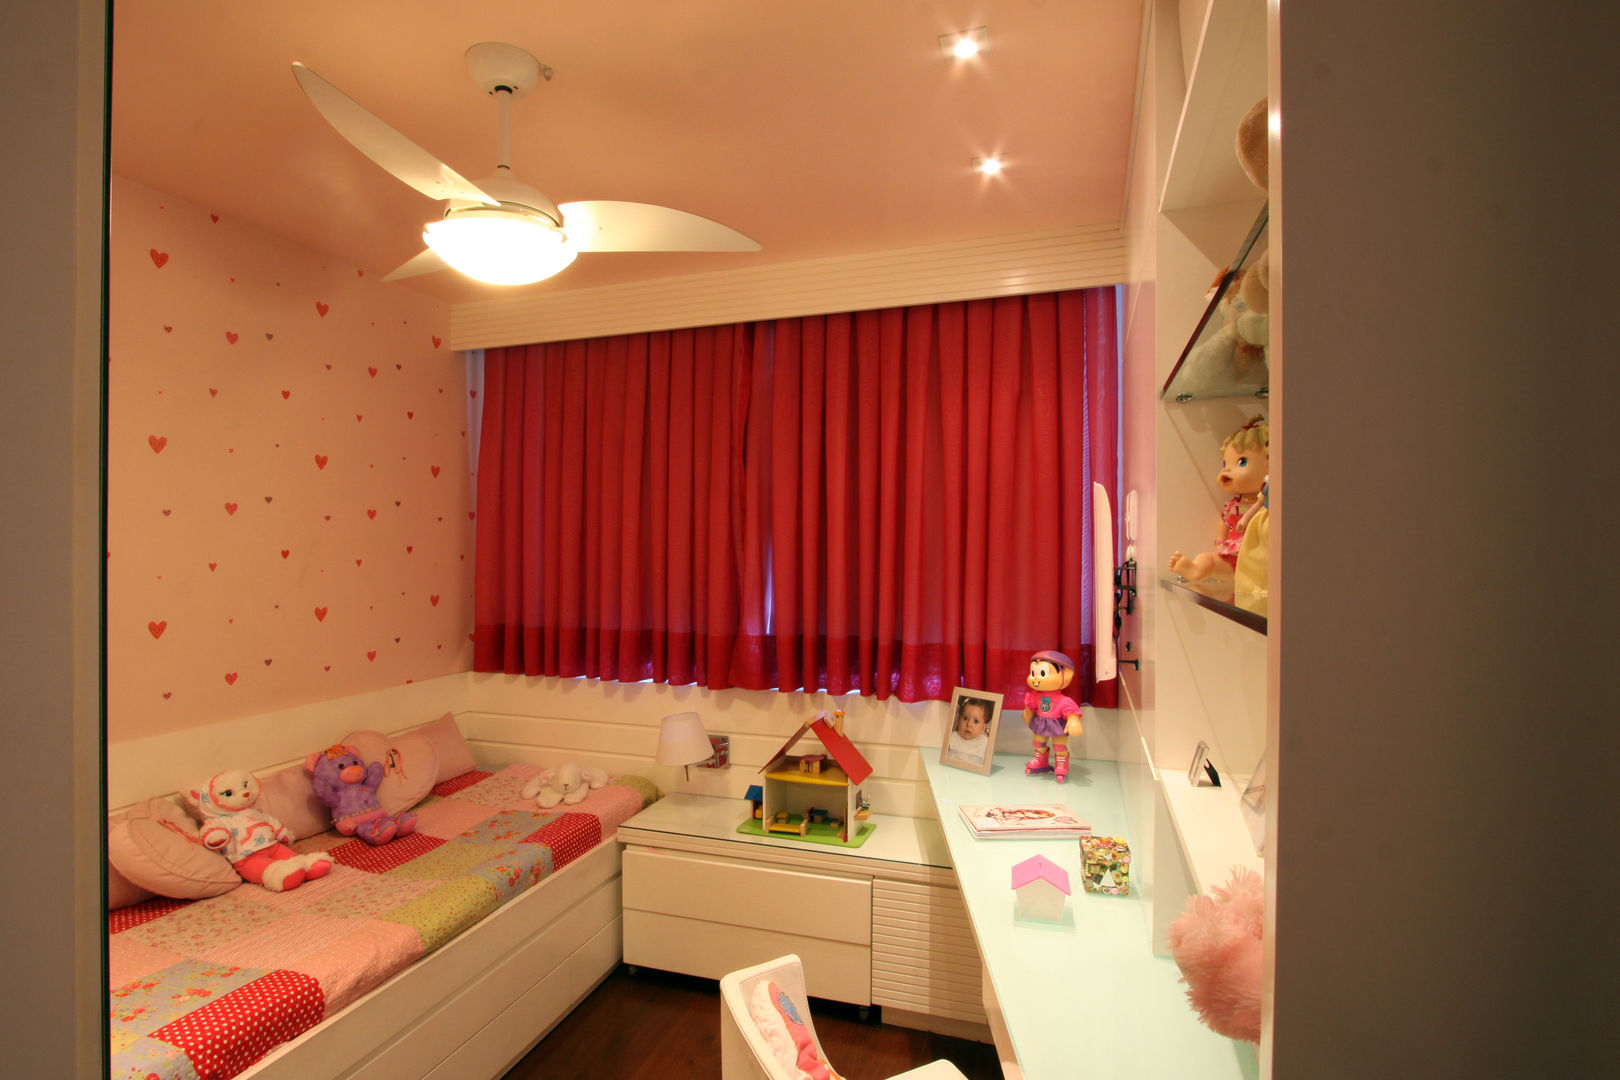 Apartamento em Icaraí II - Niterói, Arquinovação - Projetos e Obras Arquinovação - Projetos e Obras Dormitorios infantiles de estilo moderno